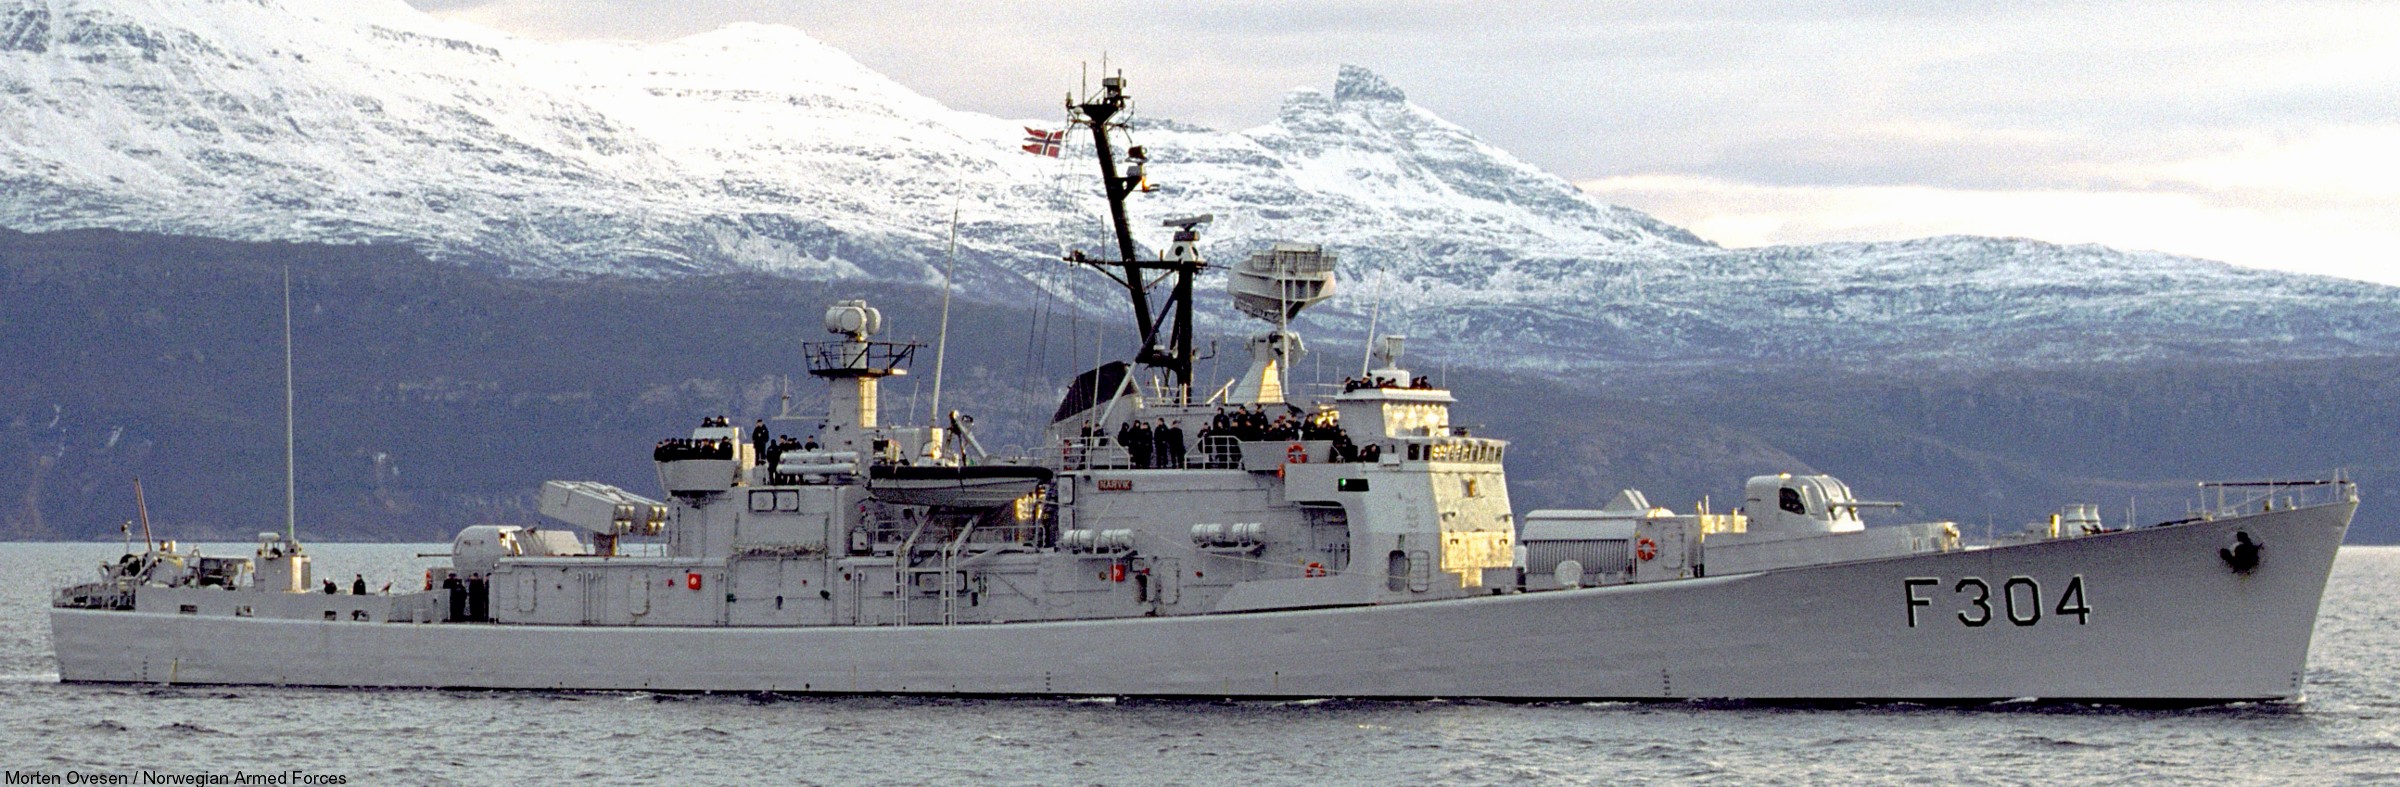 f-304 hnoms narvik knm oslo class frigate royal norwegian navy sjoforsvaret 19